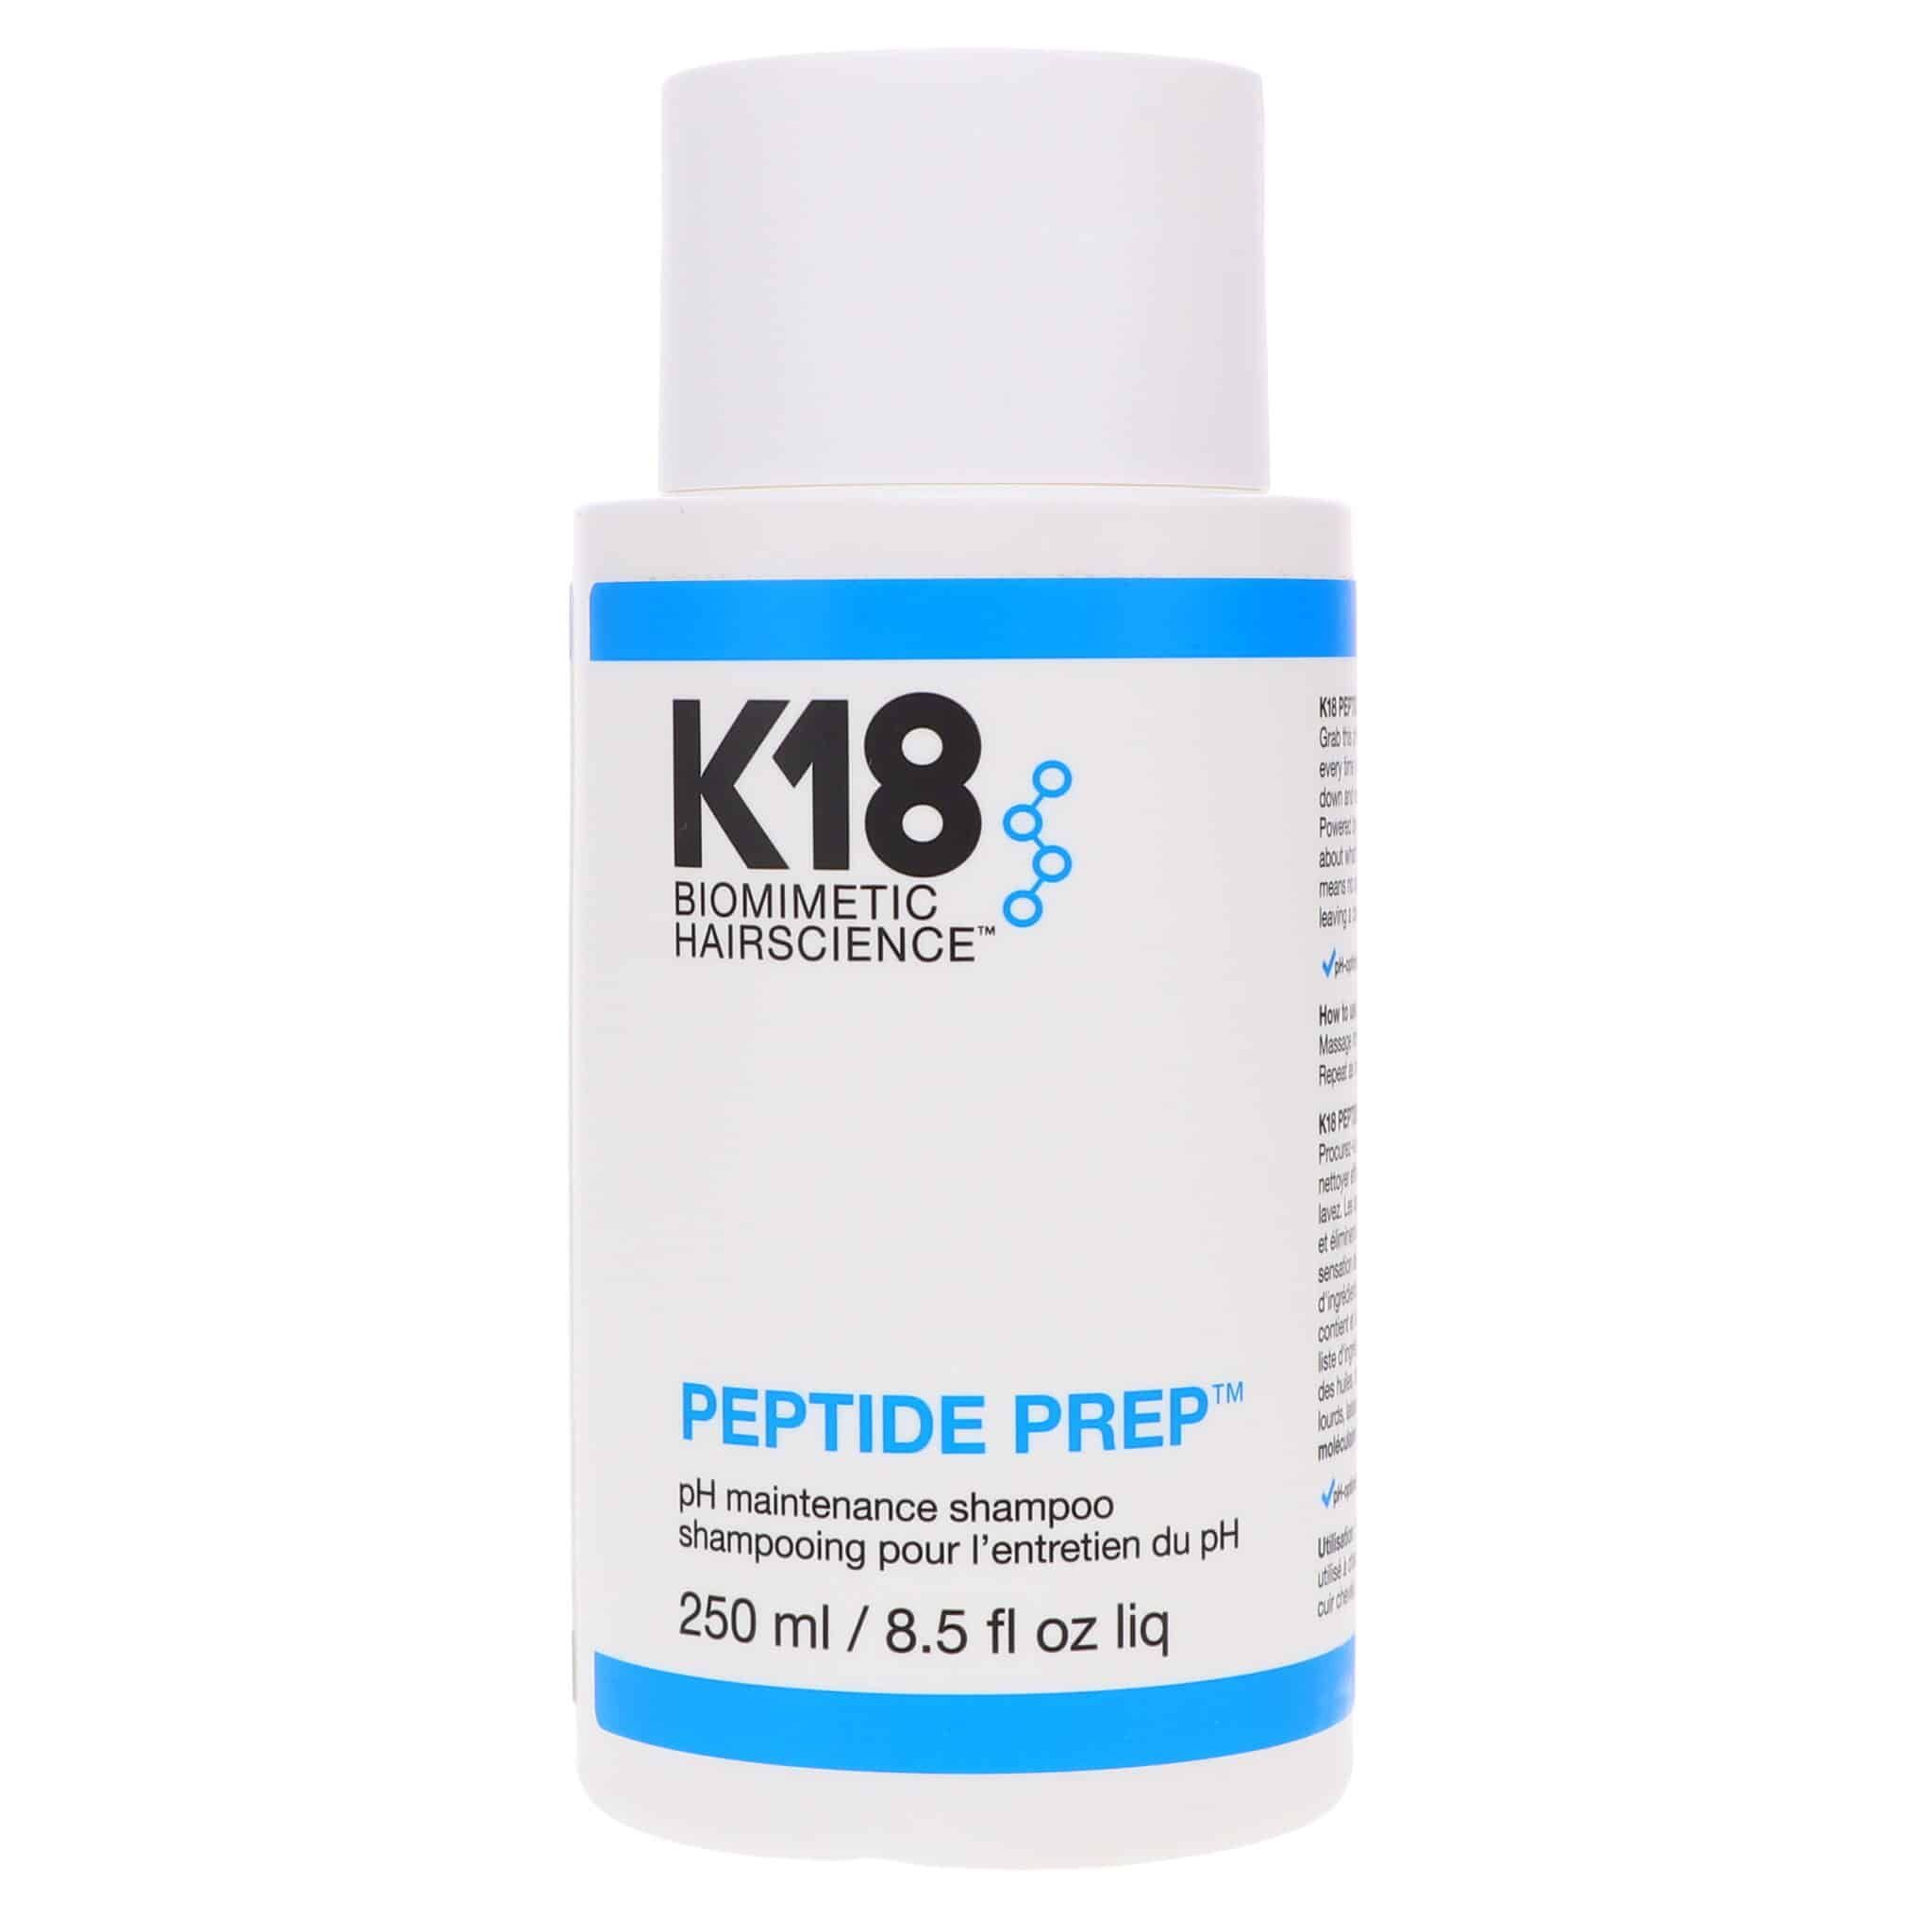 PEPTIDE PREP™ pH Maintenance Shampoo						